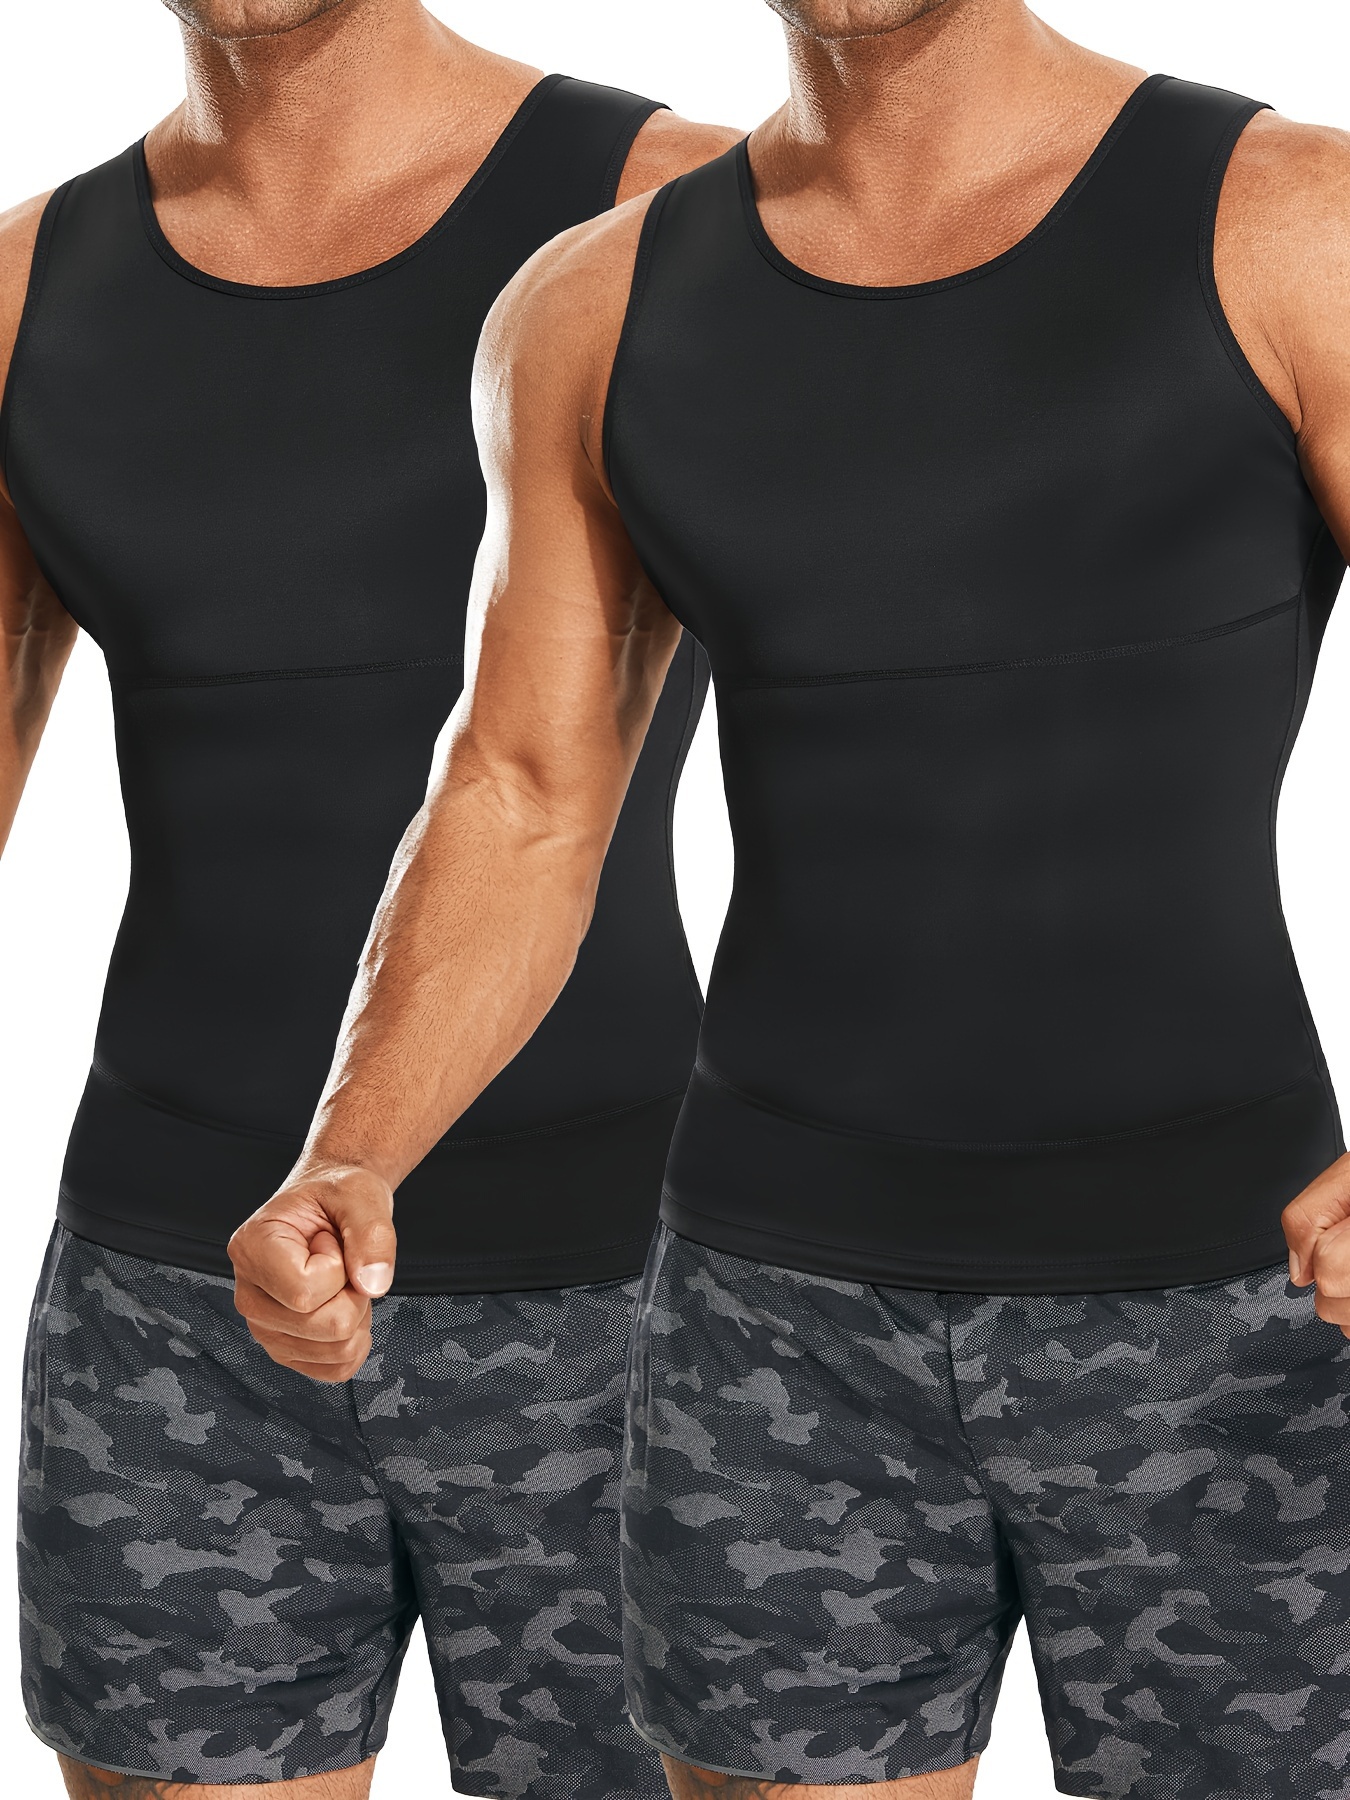 * Men's Compression Shapewear Body Shaper Stretch Slimming Tight Undershirt  Workout Vest Tank Top